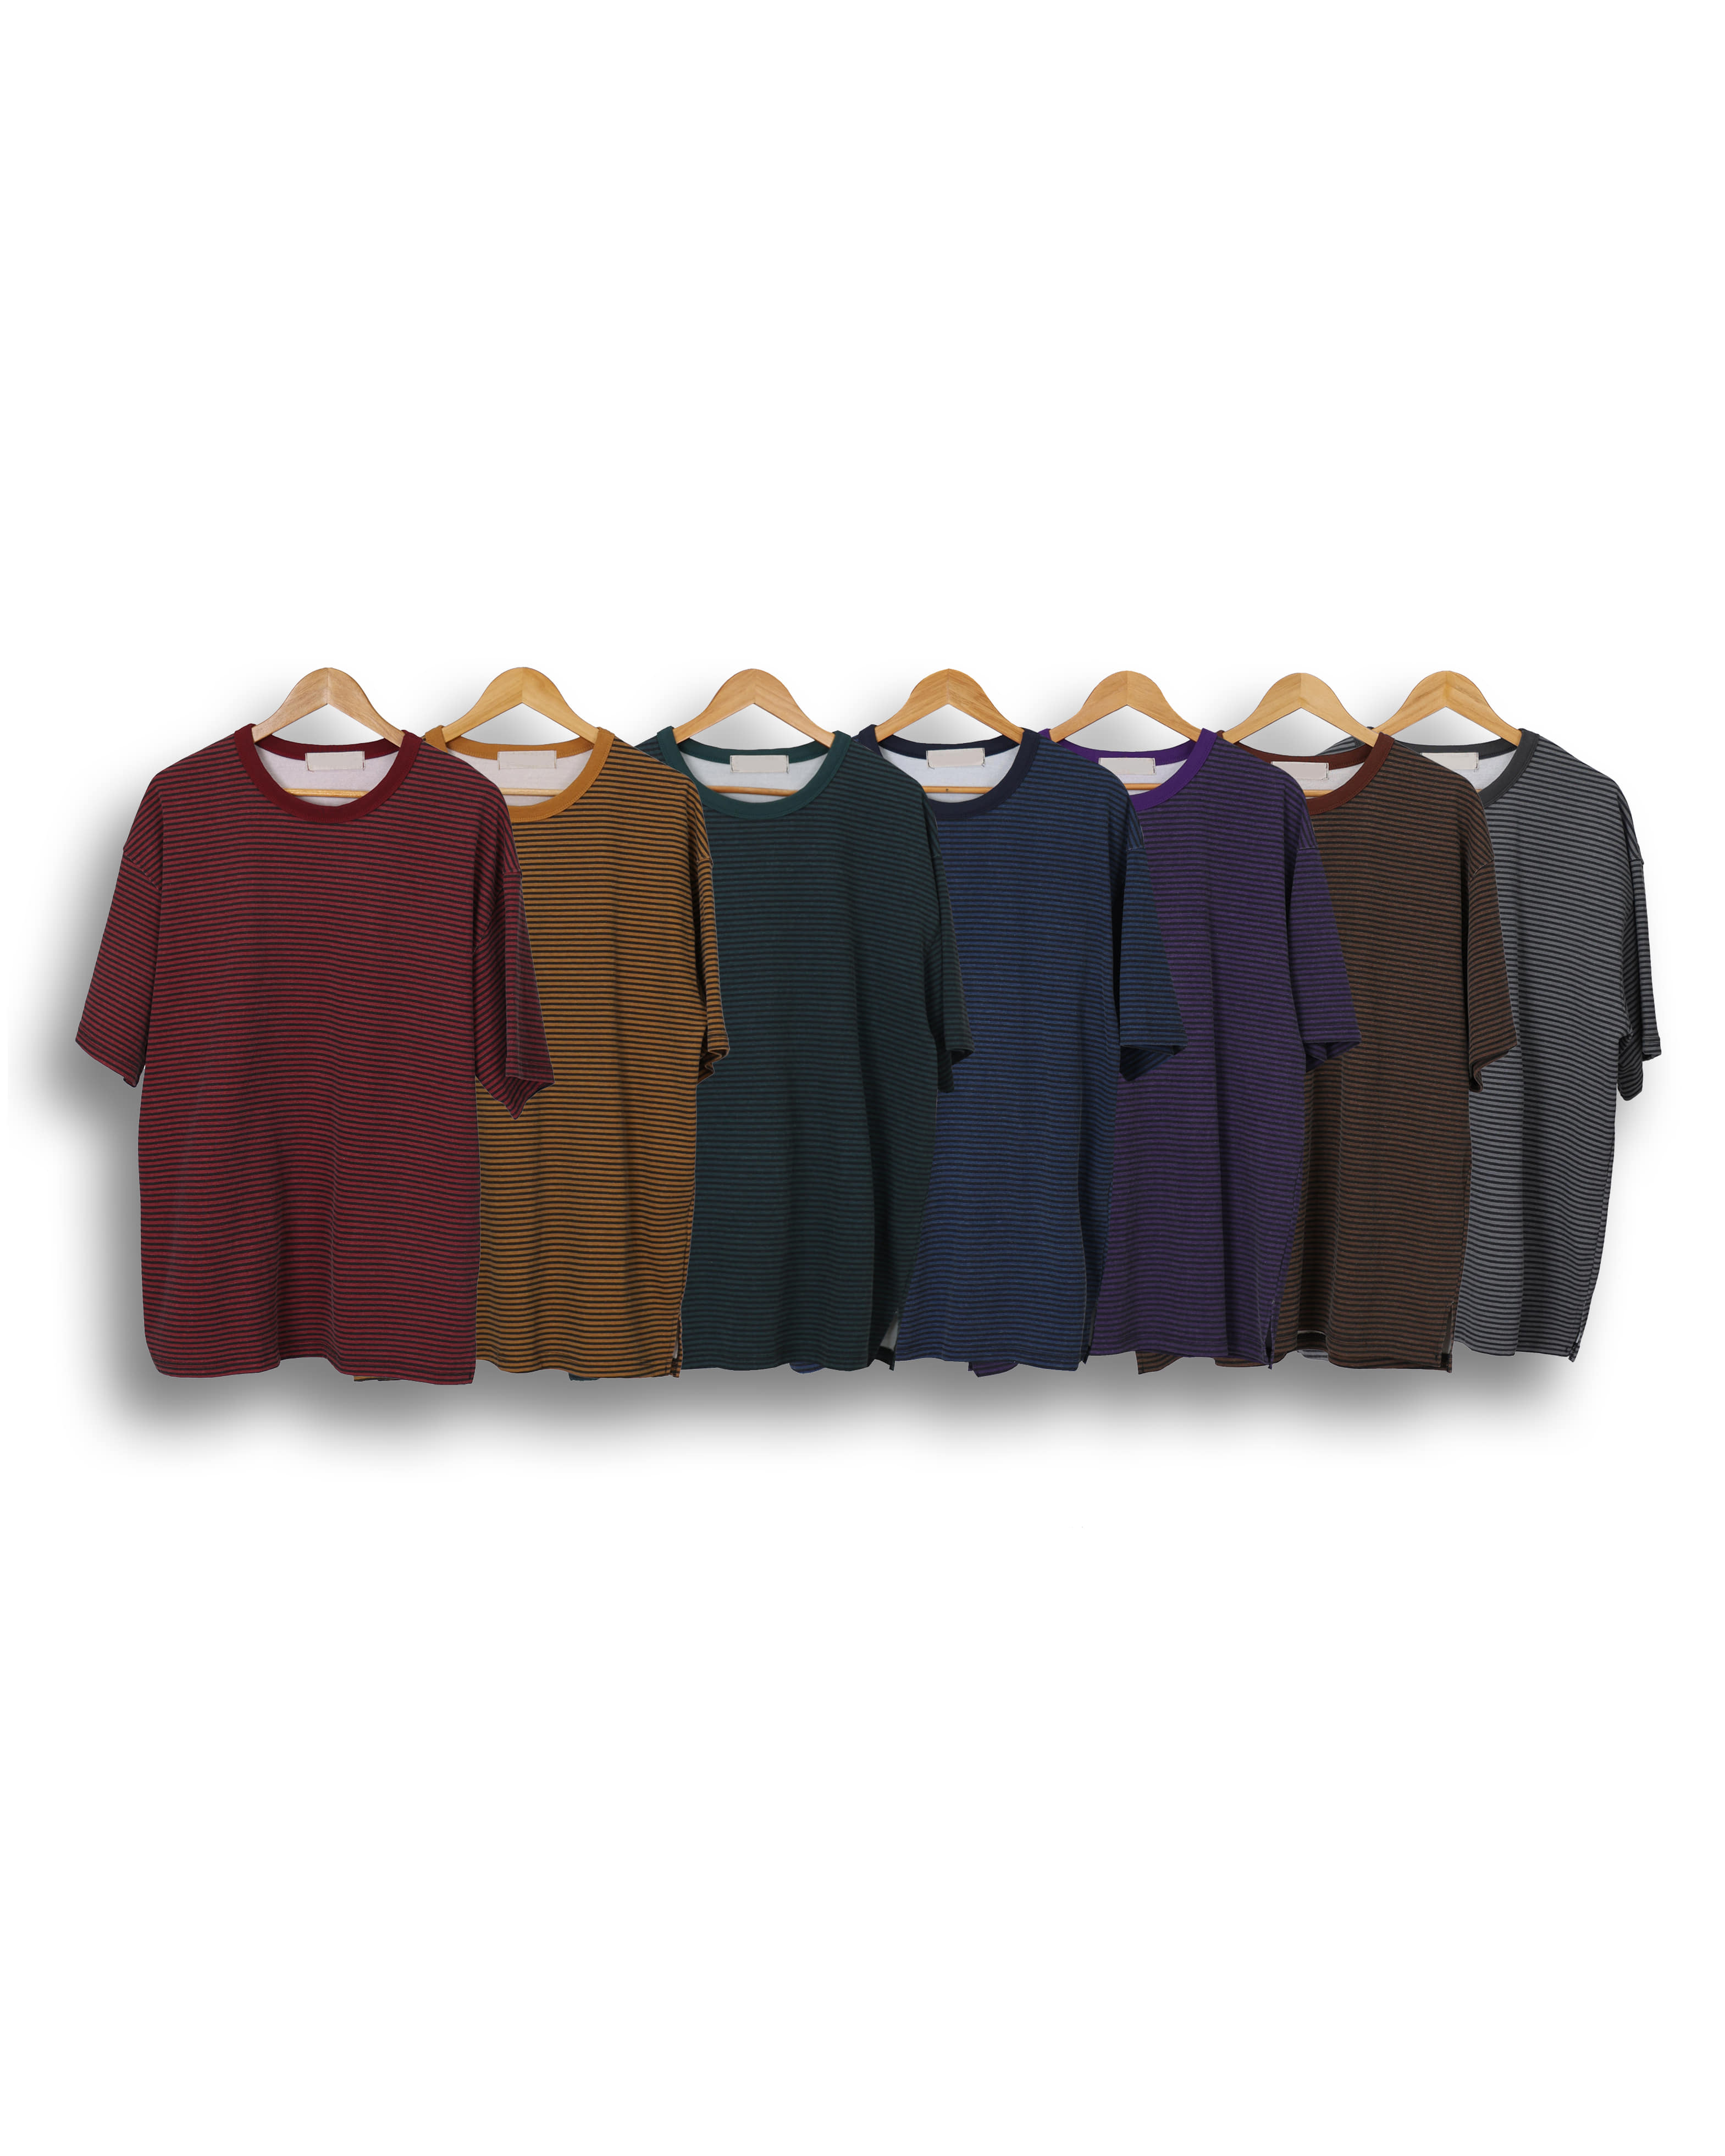 TWELVE Stripe Basic Cotton T Shirts(Gray/Purple/Brown/Blue/Green/Yellow/Red)